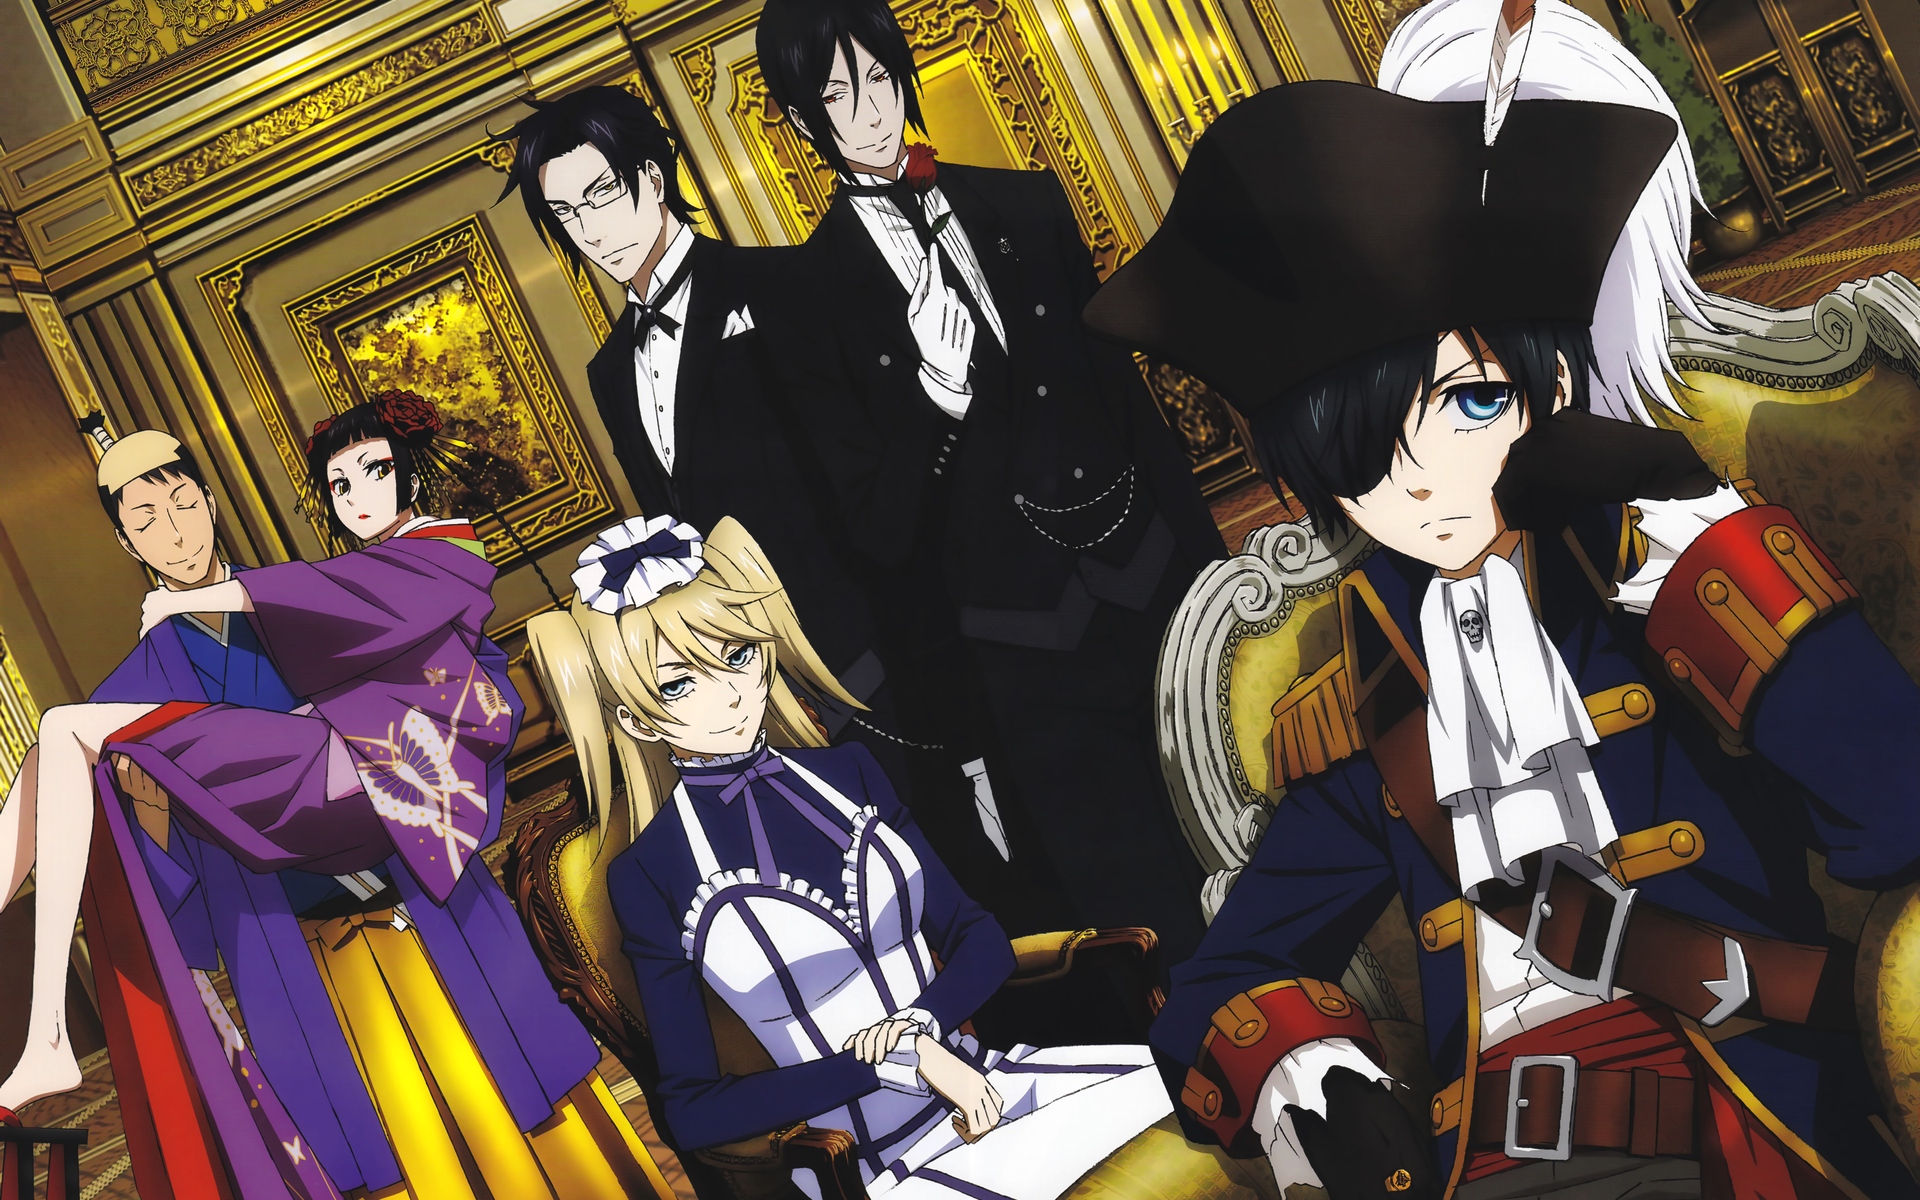 Anime inspired black and white wallpaper featuring characters from Kuroshitsuji.